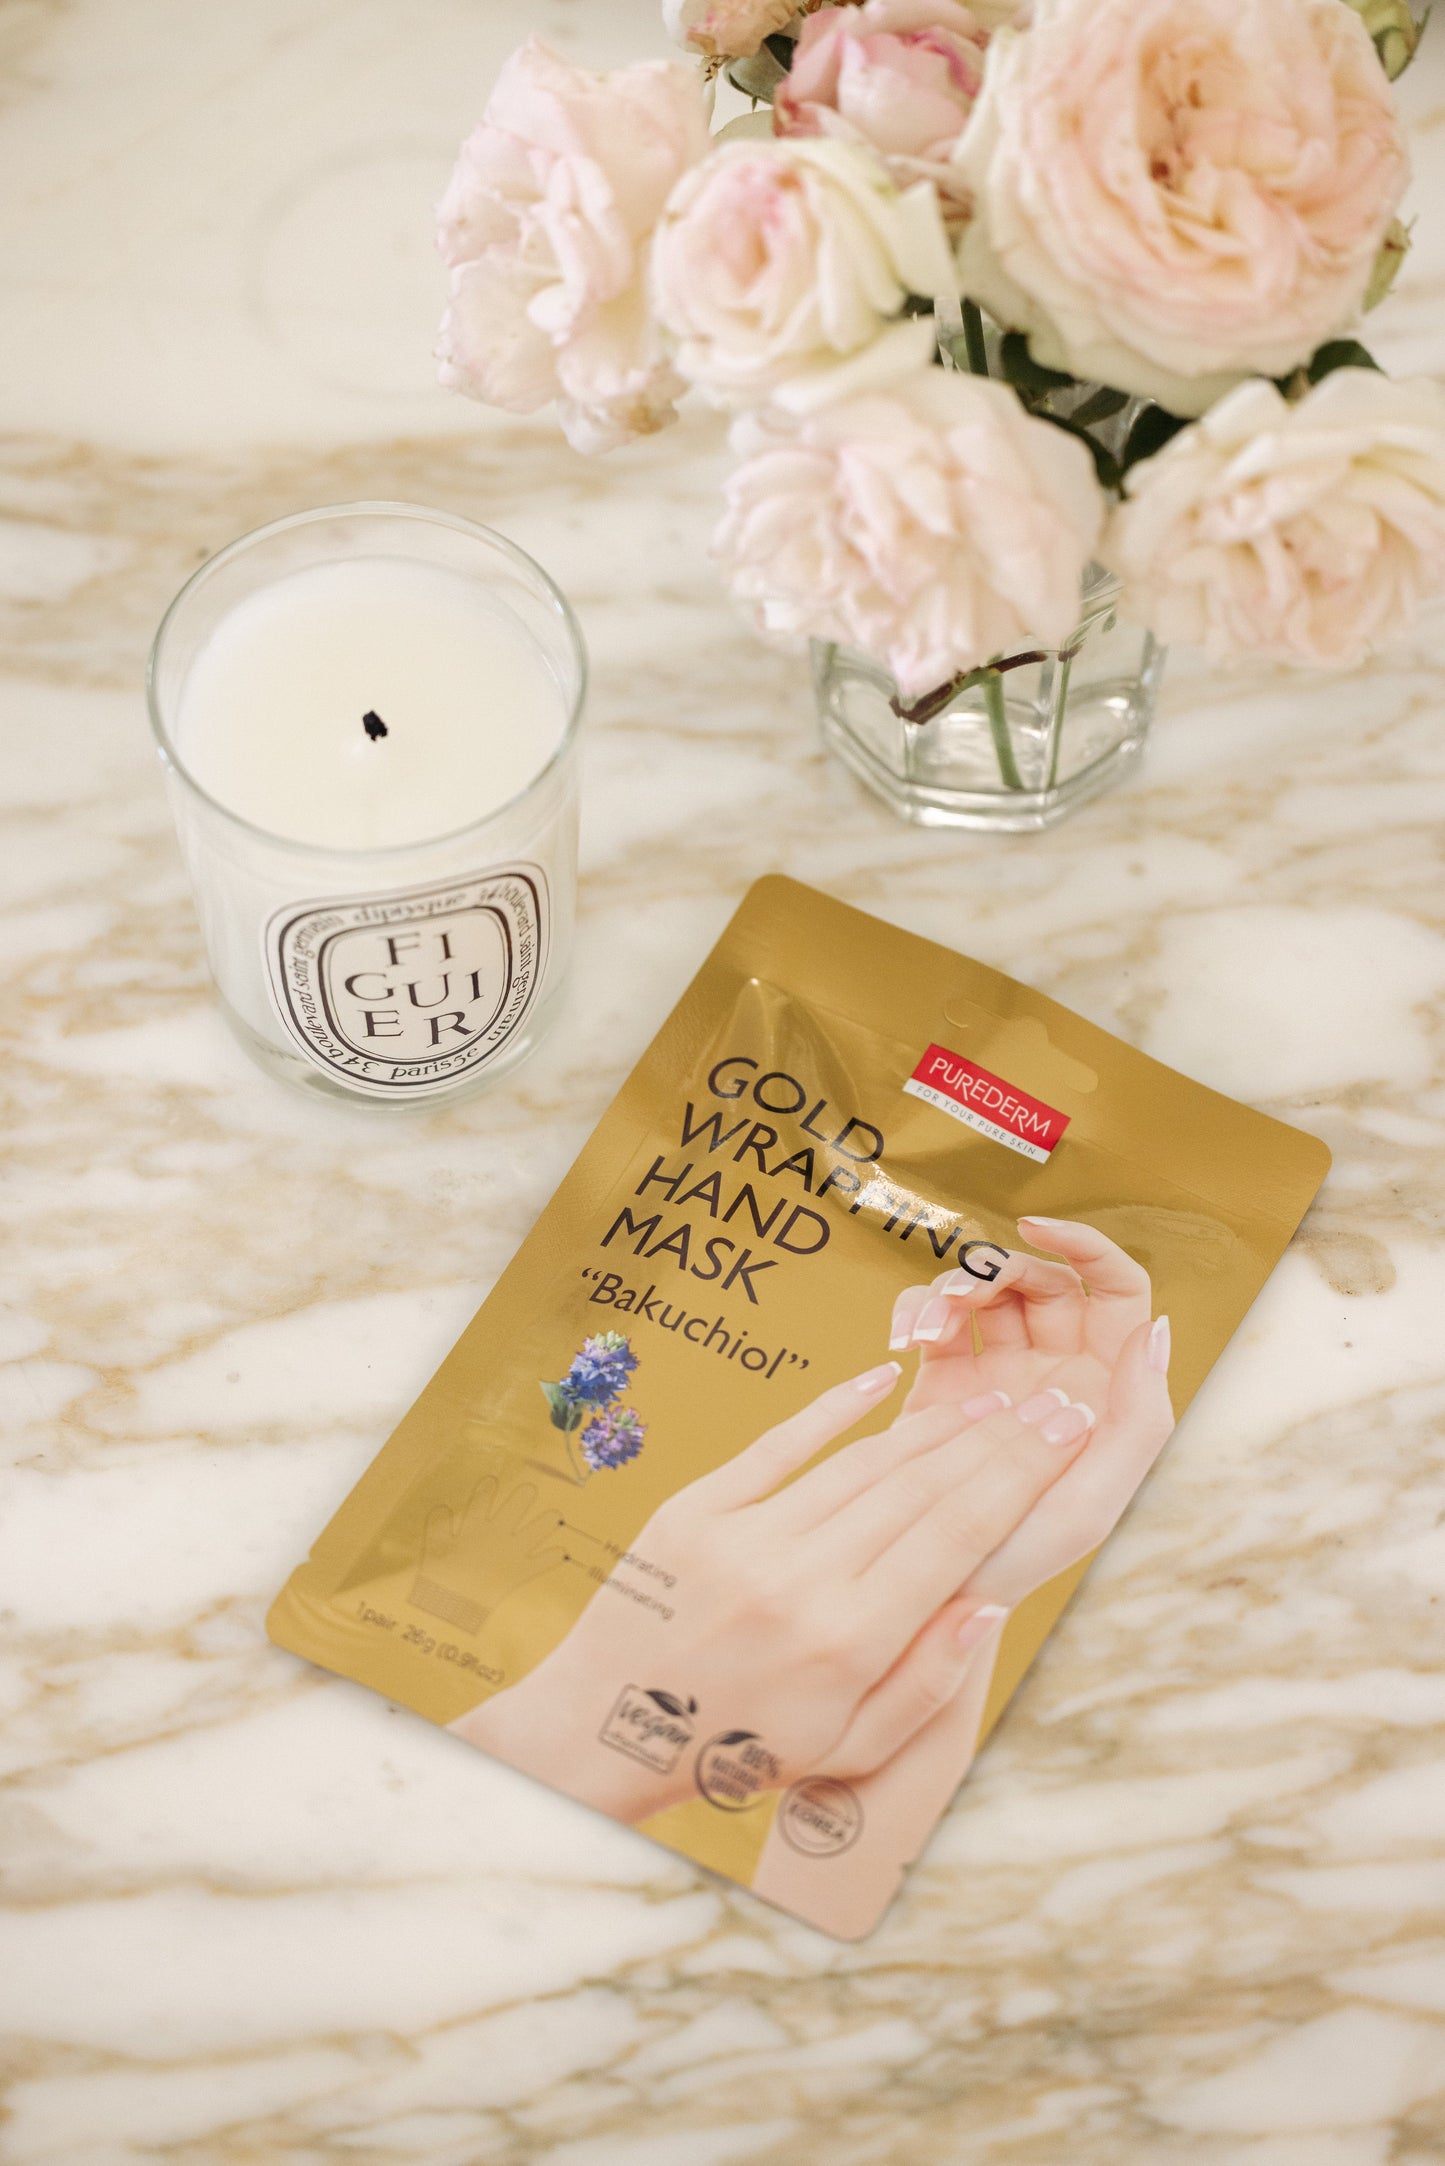 Gold wrapping hand mask “bakuchiol”